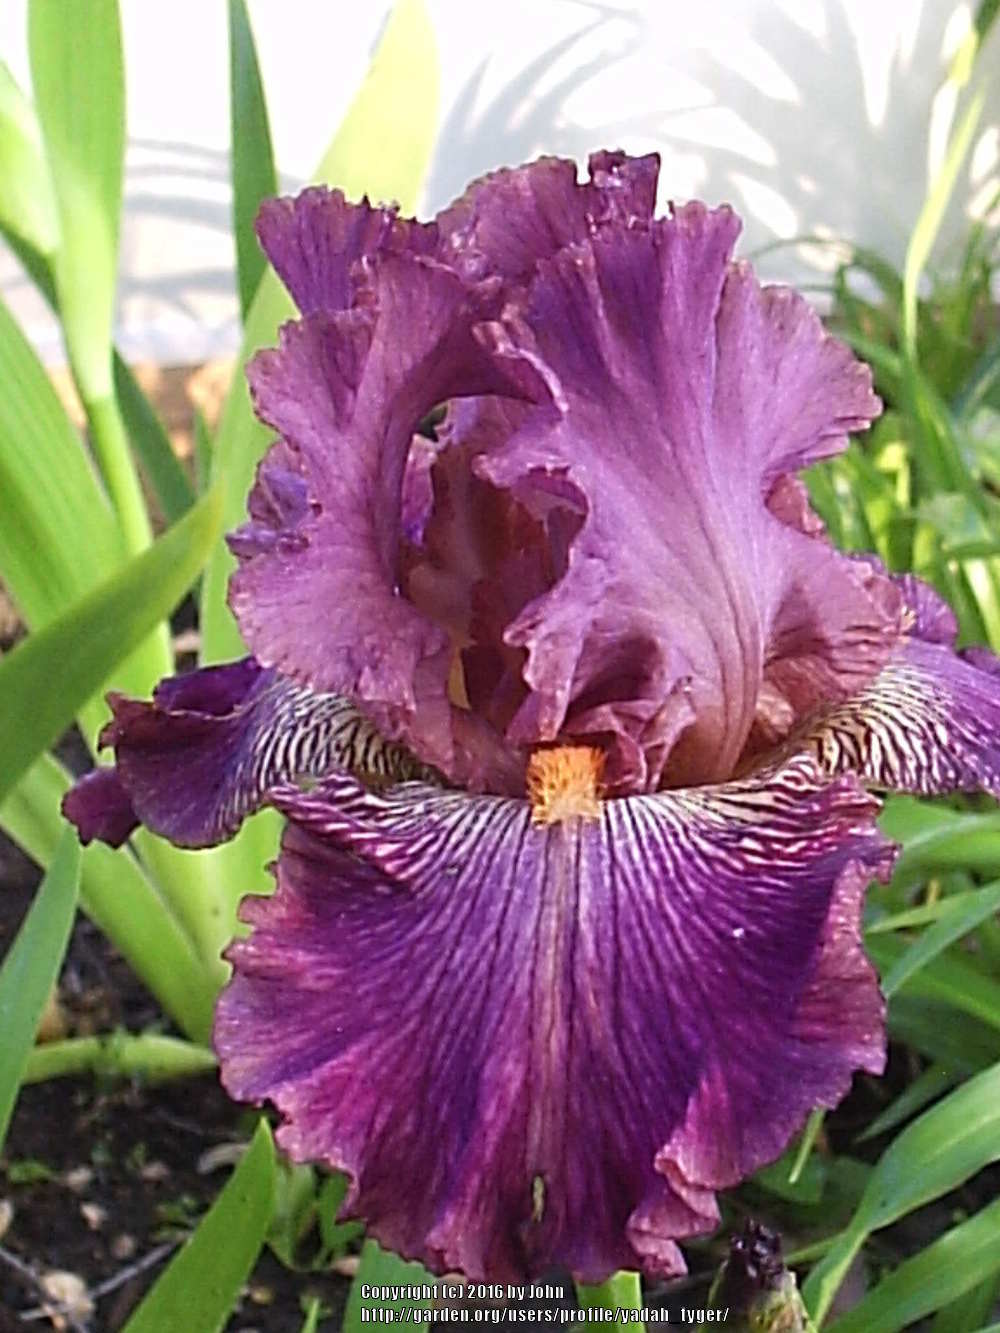 Photo of Tall Bearded Iris (Iris 'Art School') uploaded by yadah_tyger